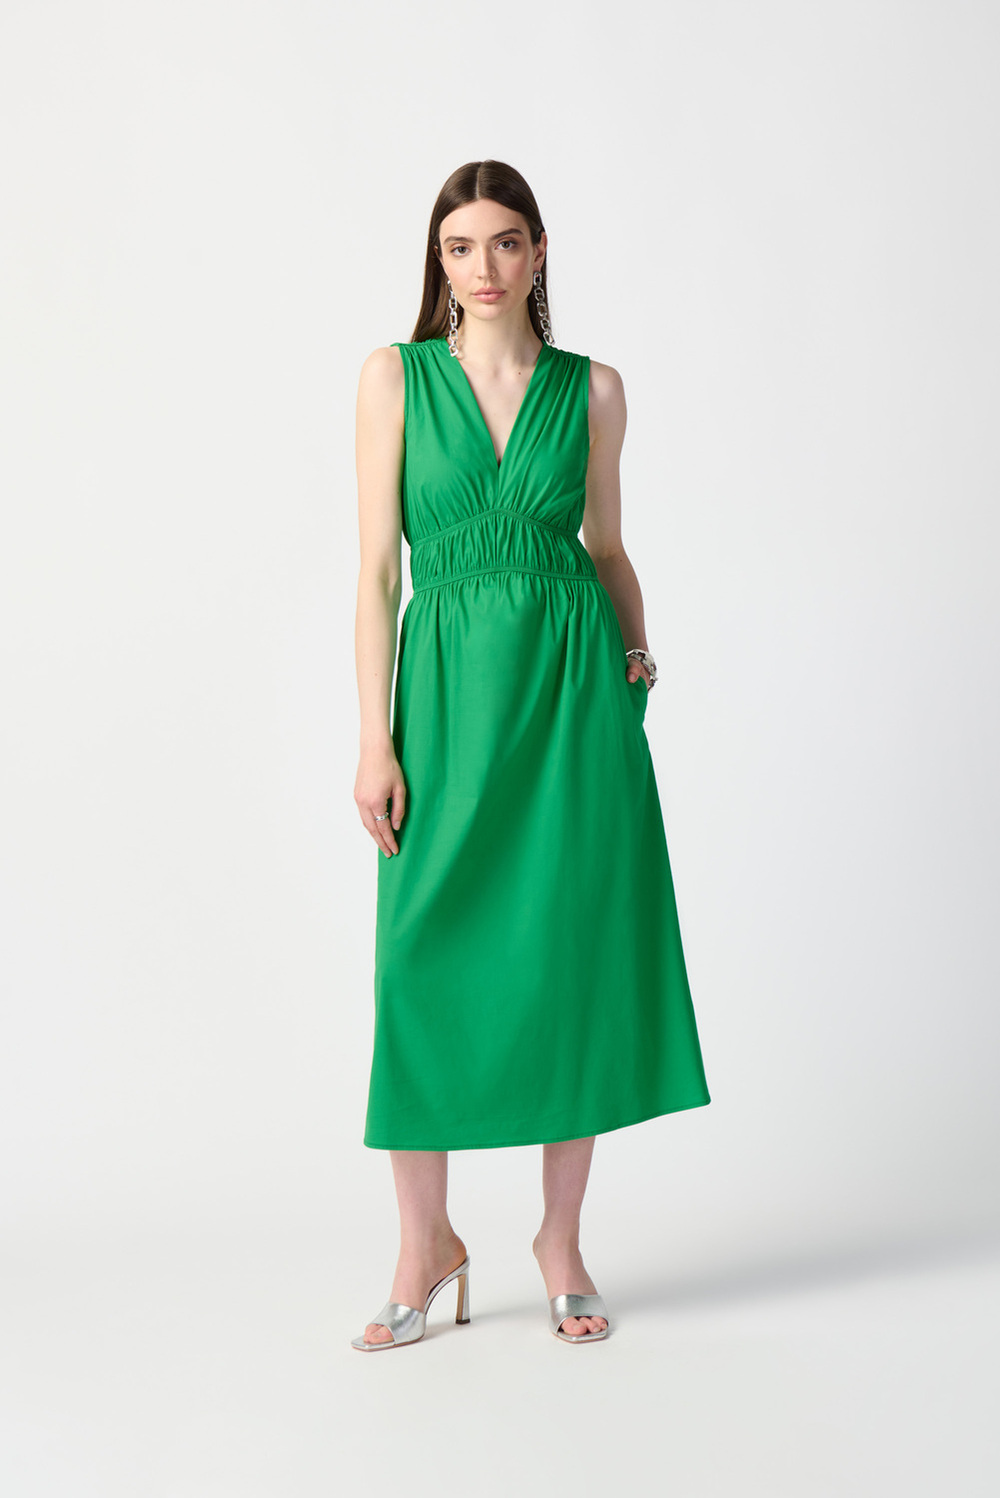 Gathered Midi Dress Style 241127. Island Green